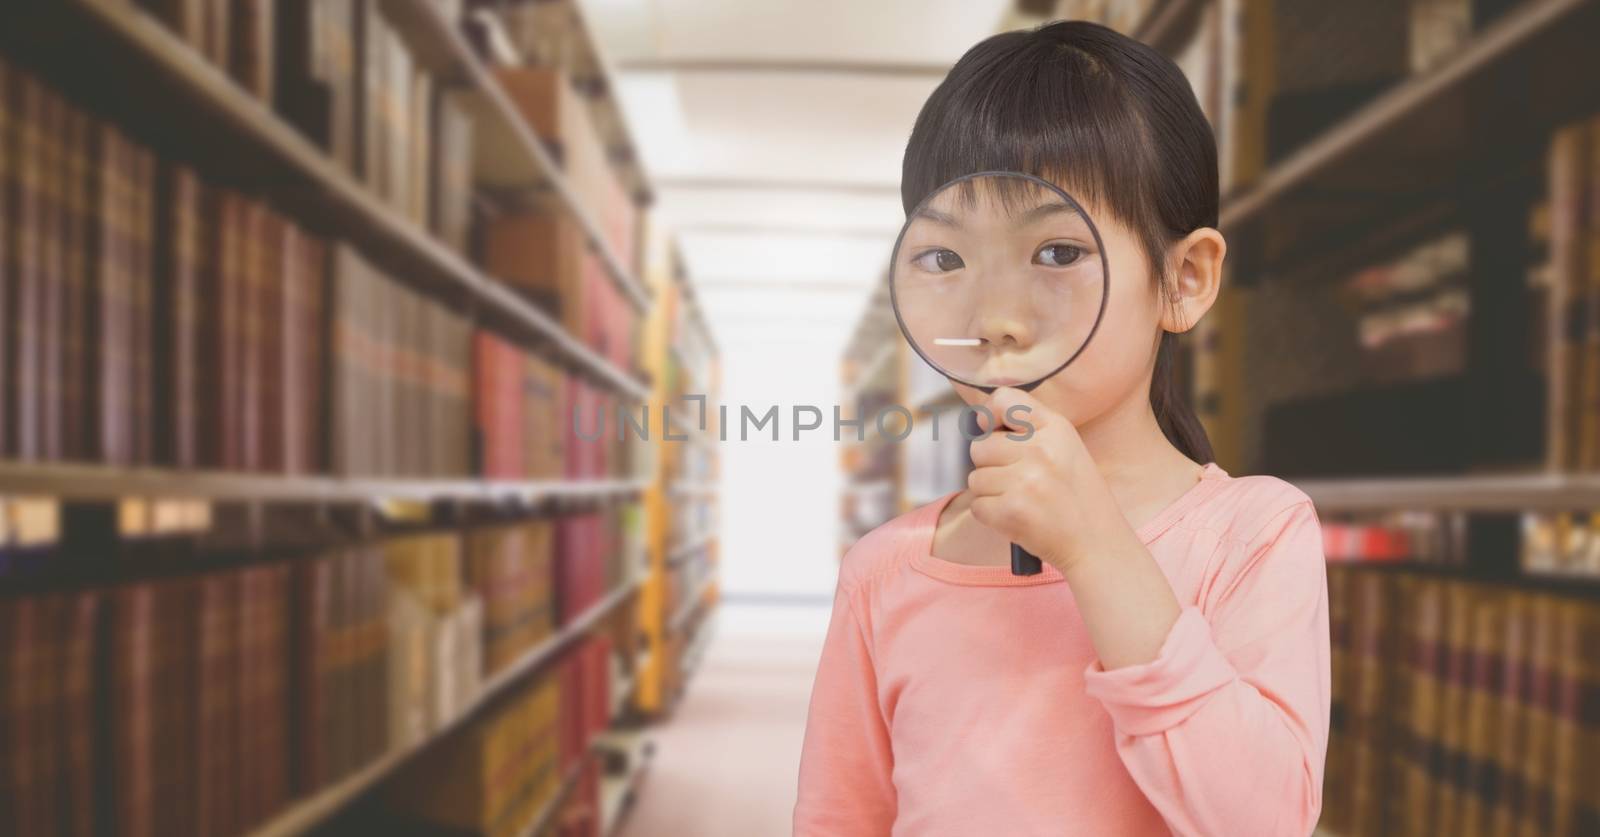 School girl in education library by Wavebreakmedia